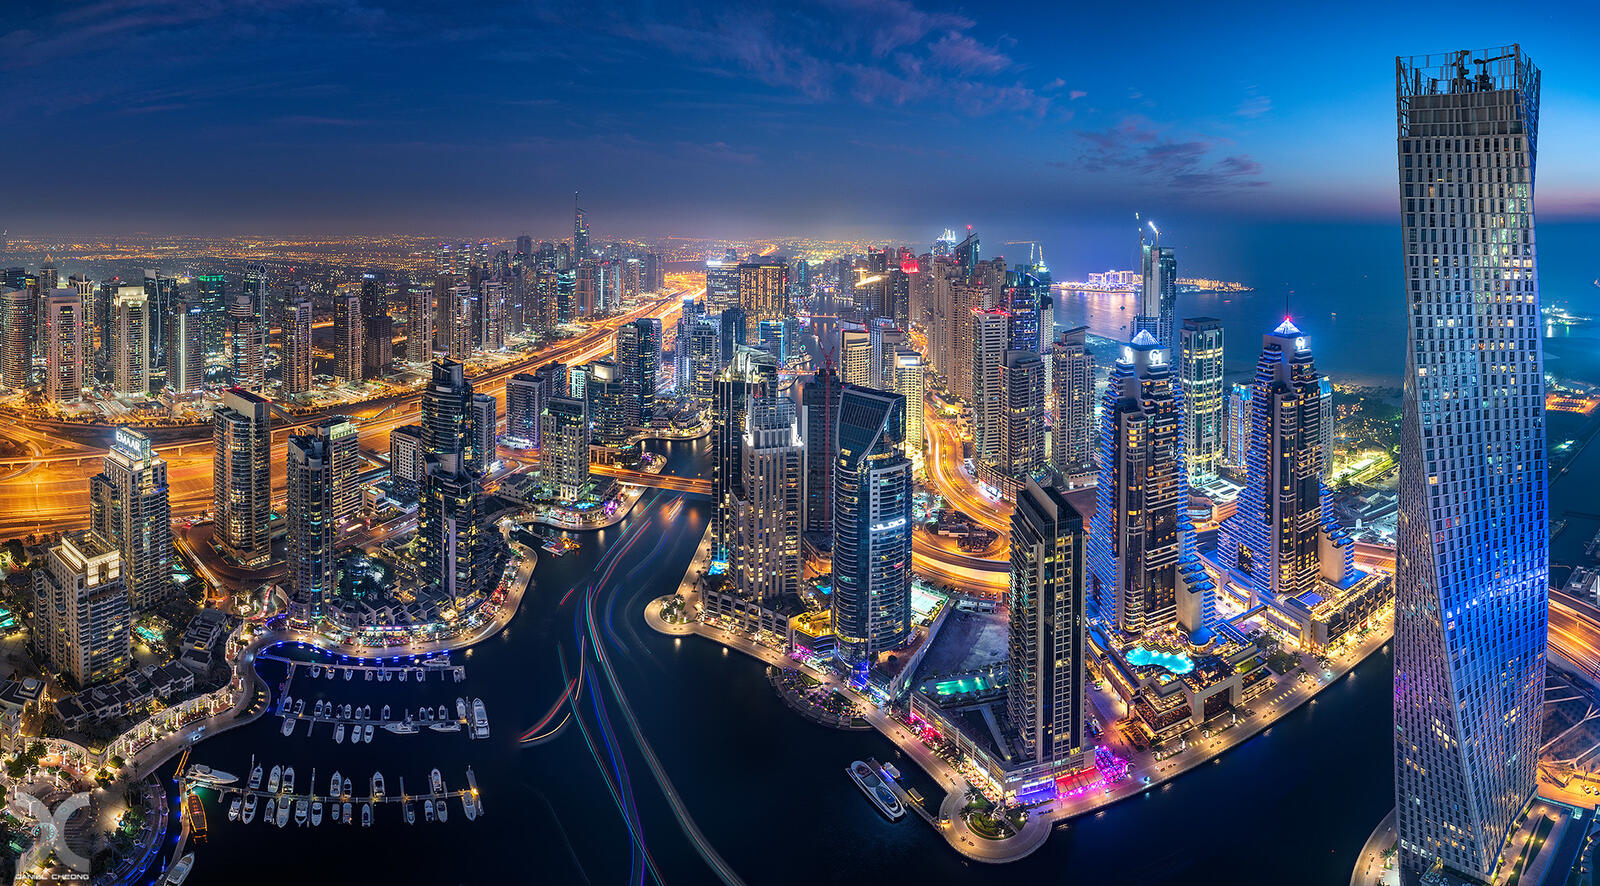 Wallpapers night cities Dubai United Arab Emirates on the desktop